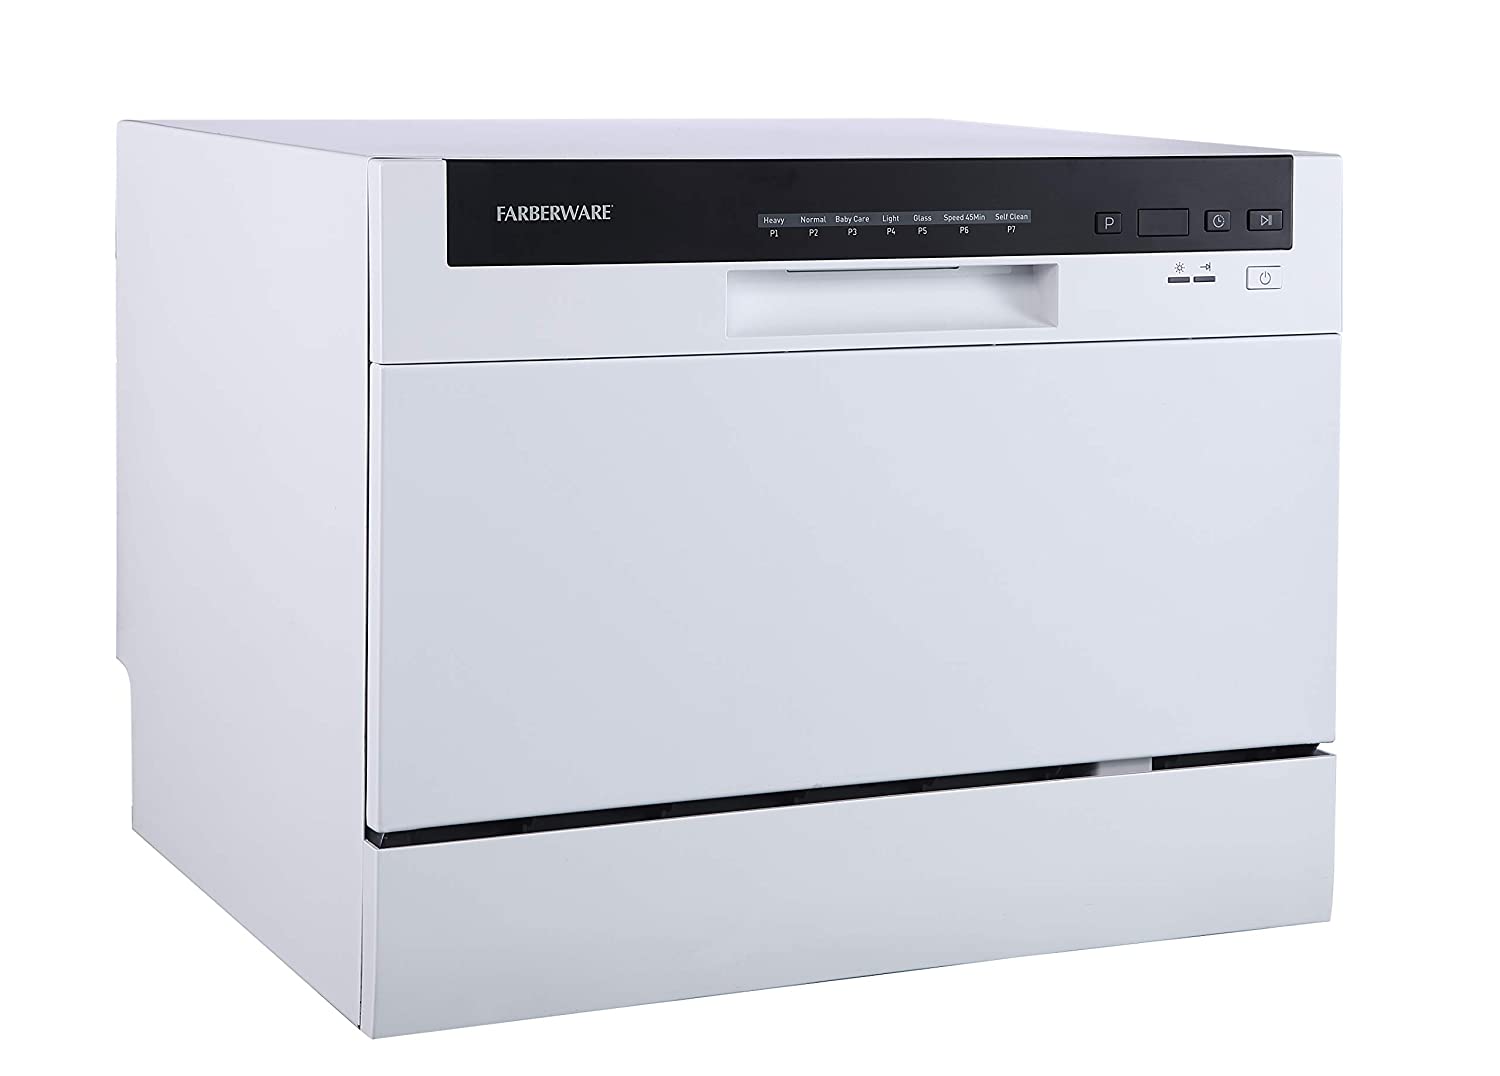 Farberware 6-Place Setting Countertop Dishwasher FCD06ABBWHA User Manual